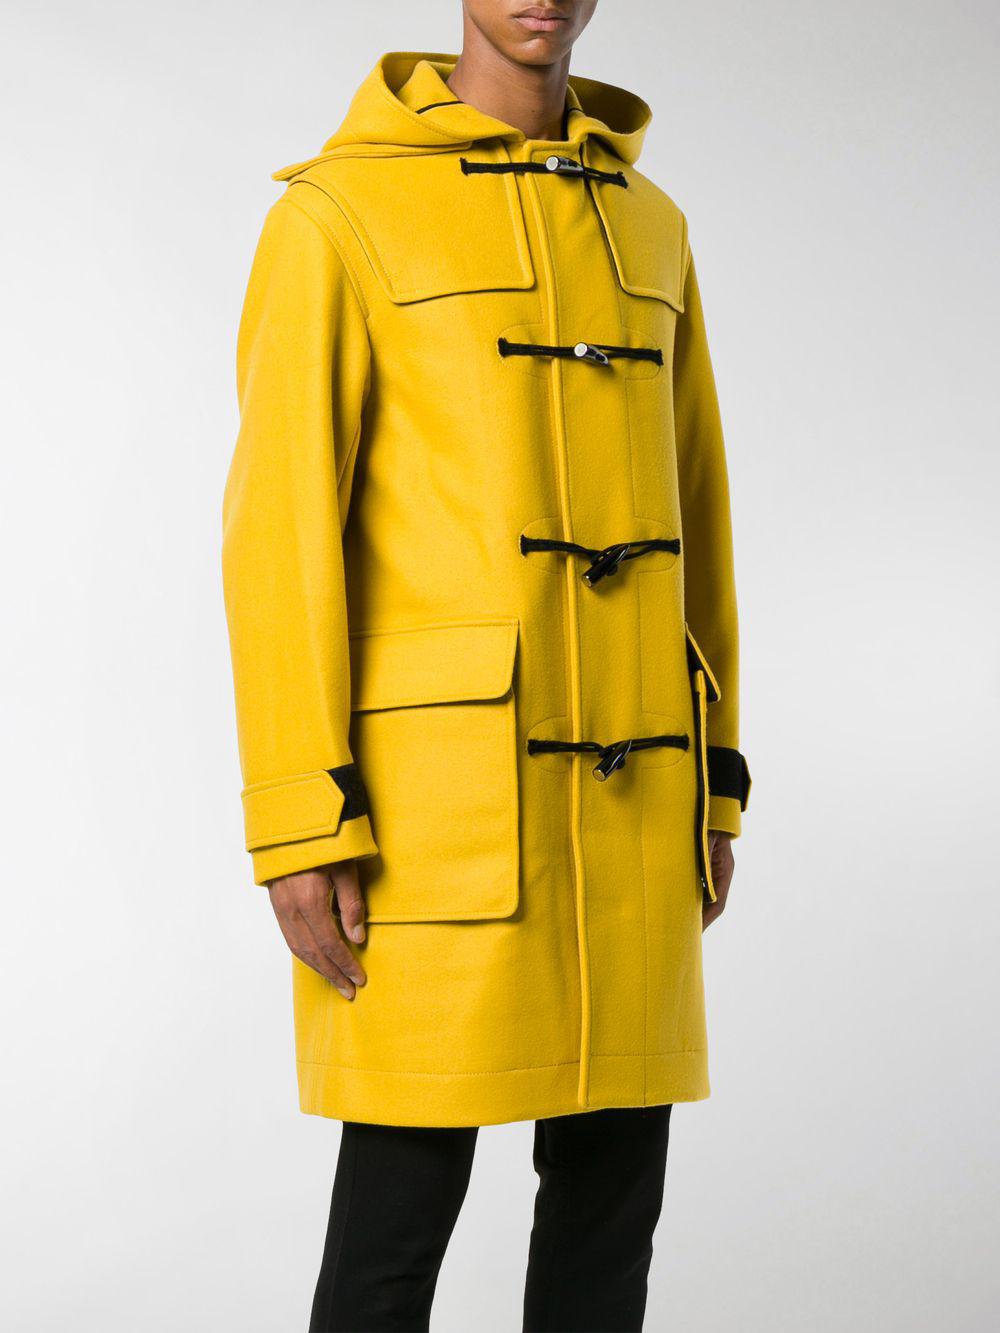 KENZO Virgin Wool Duffle Coat in Yellow & Orange (Yellow) for Men - Lyst